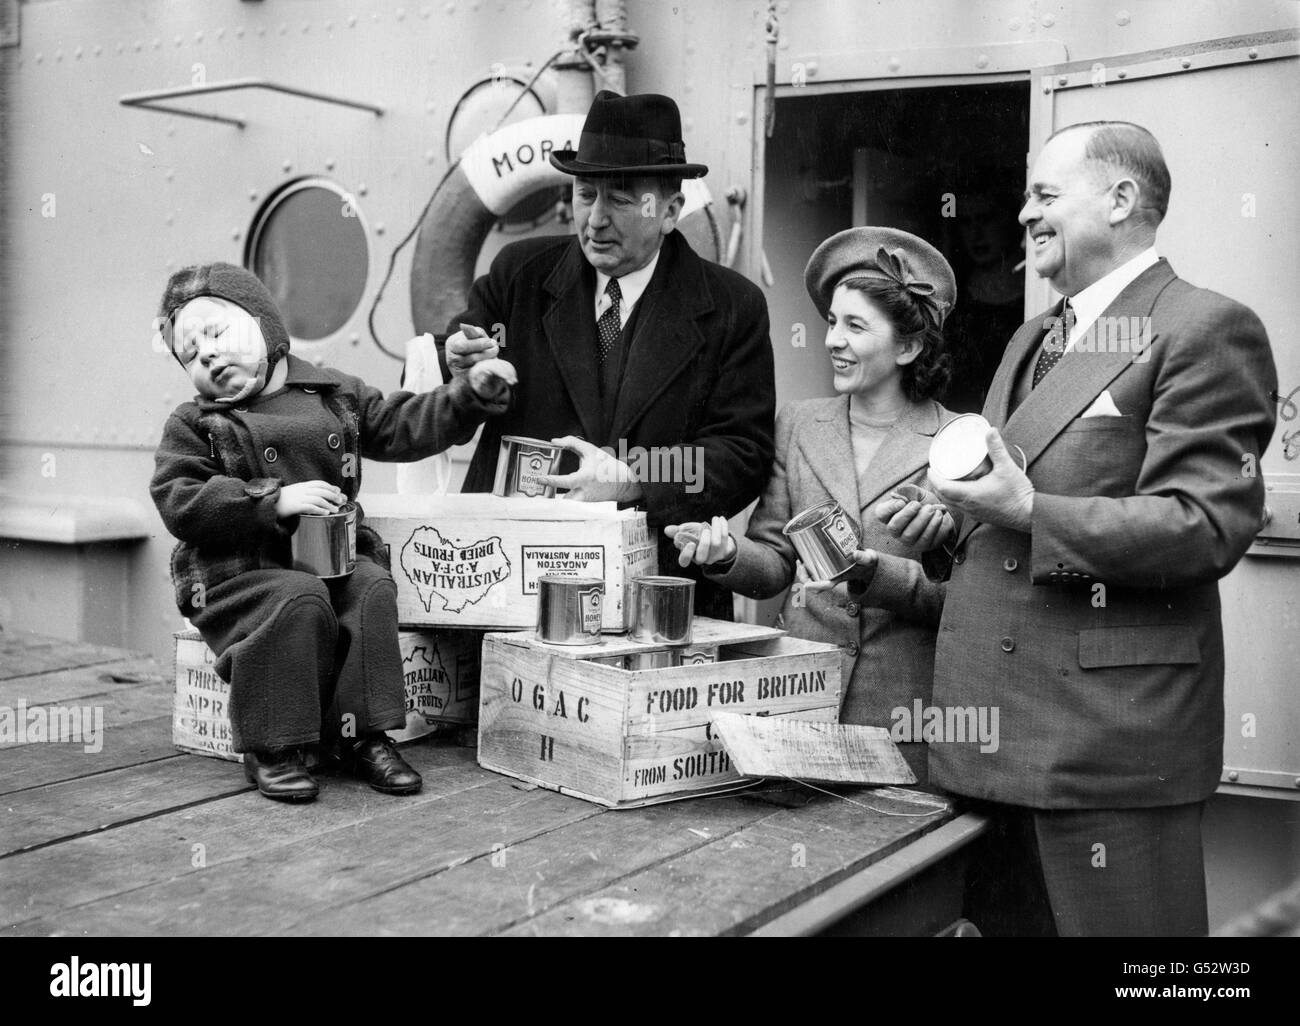 Rationing - Australian Food Shipment - King George V Dock, London Stock Photo